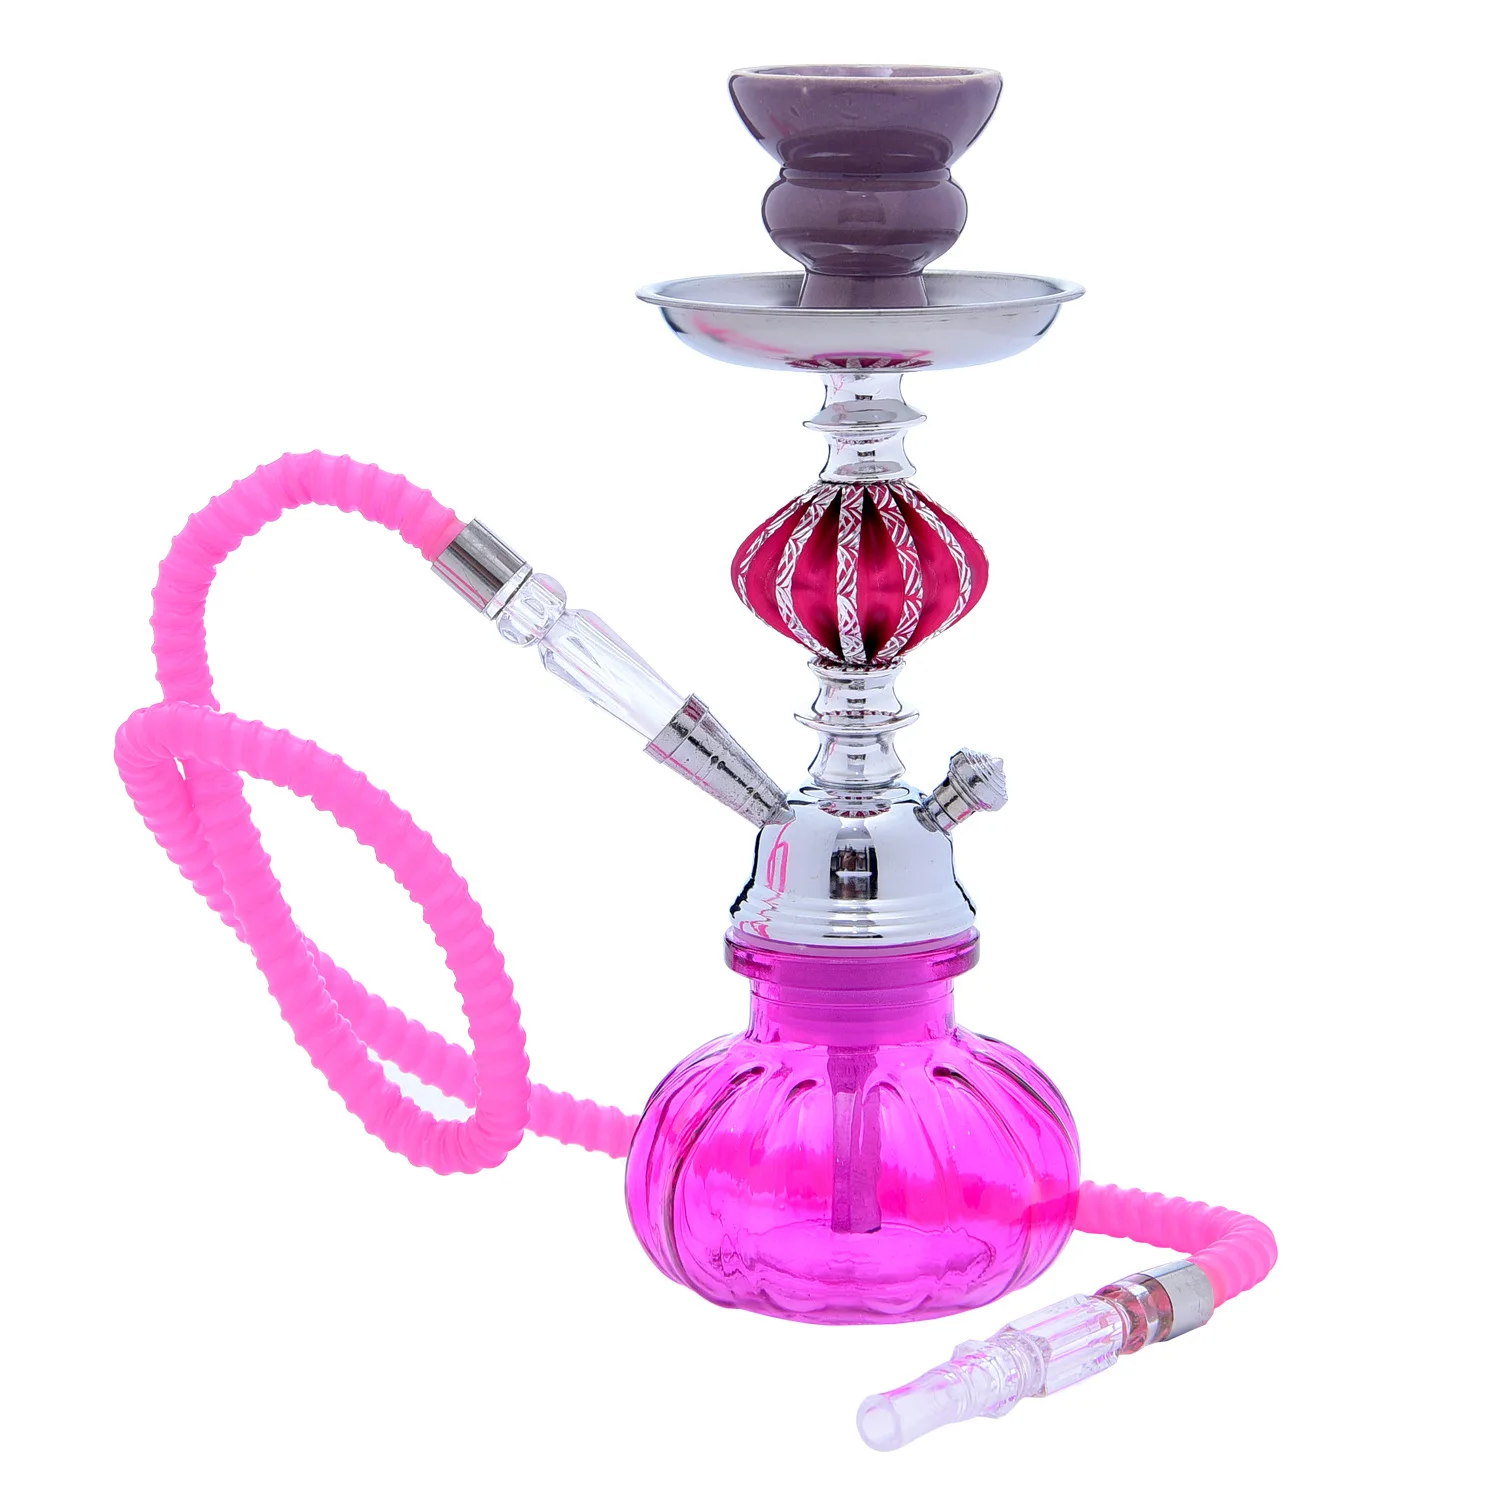 

DEJAYA Small Hookah Set Travel Shisha Pipe Portable Narguile Chicha Pipe with Hose Bowl Tongs Charcoal Tray Smoking Accessories